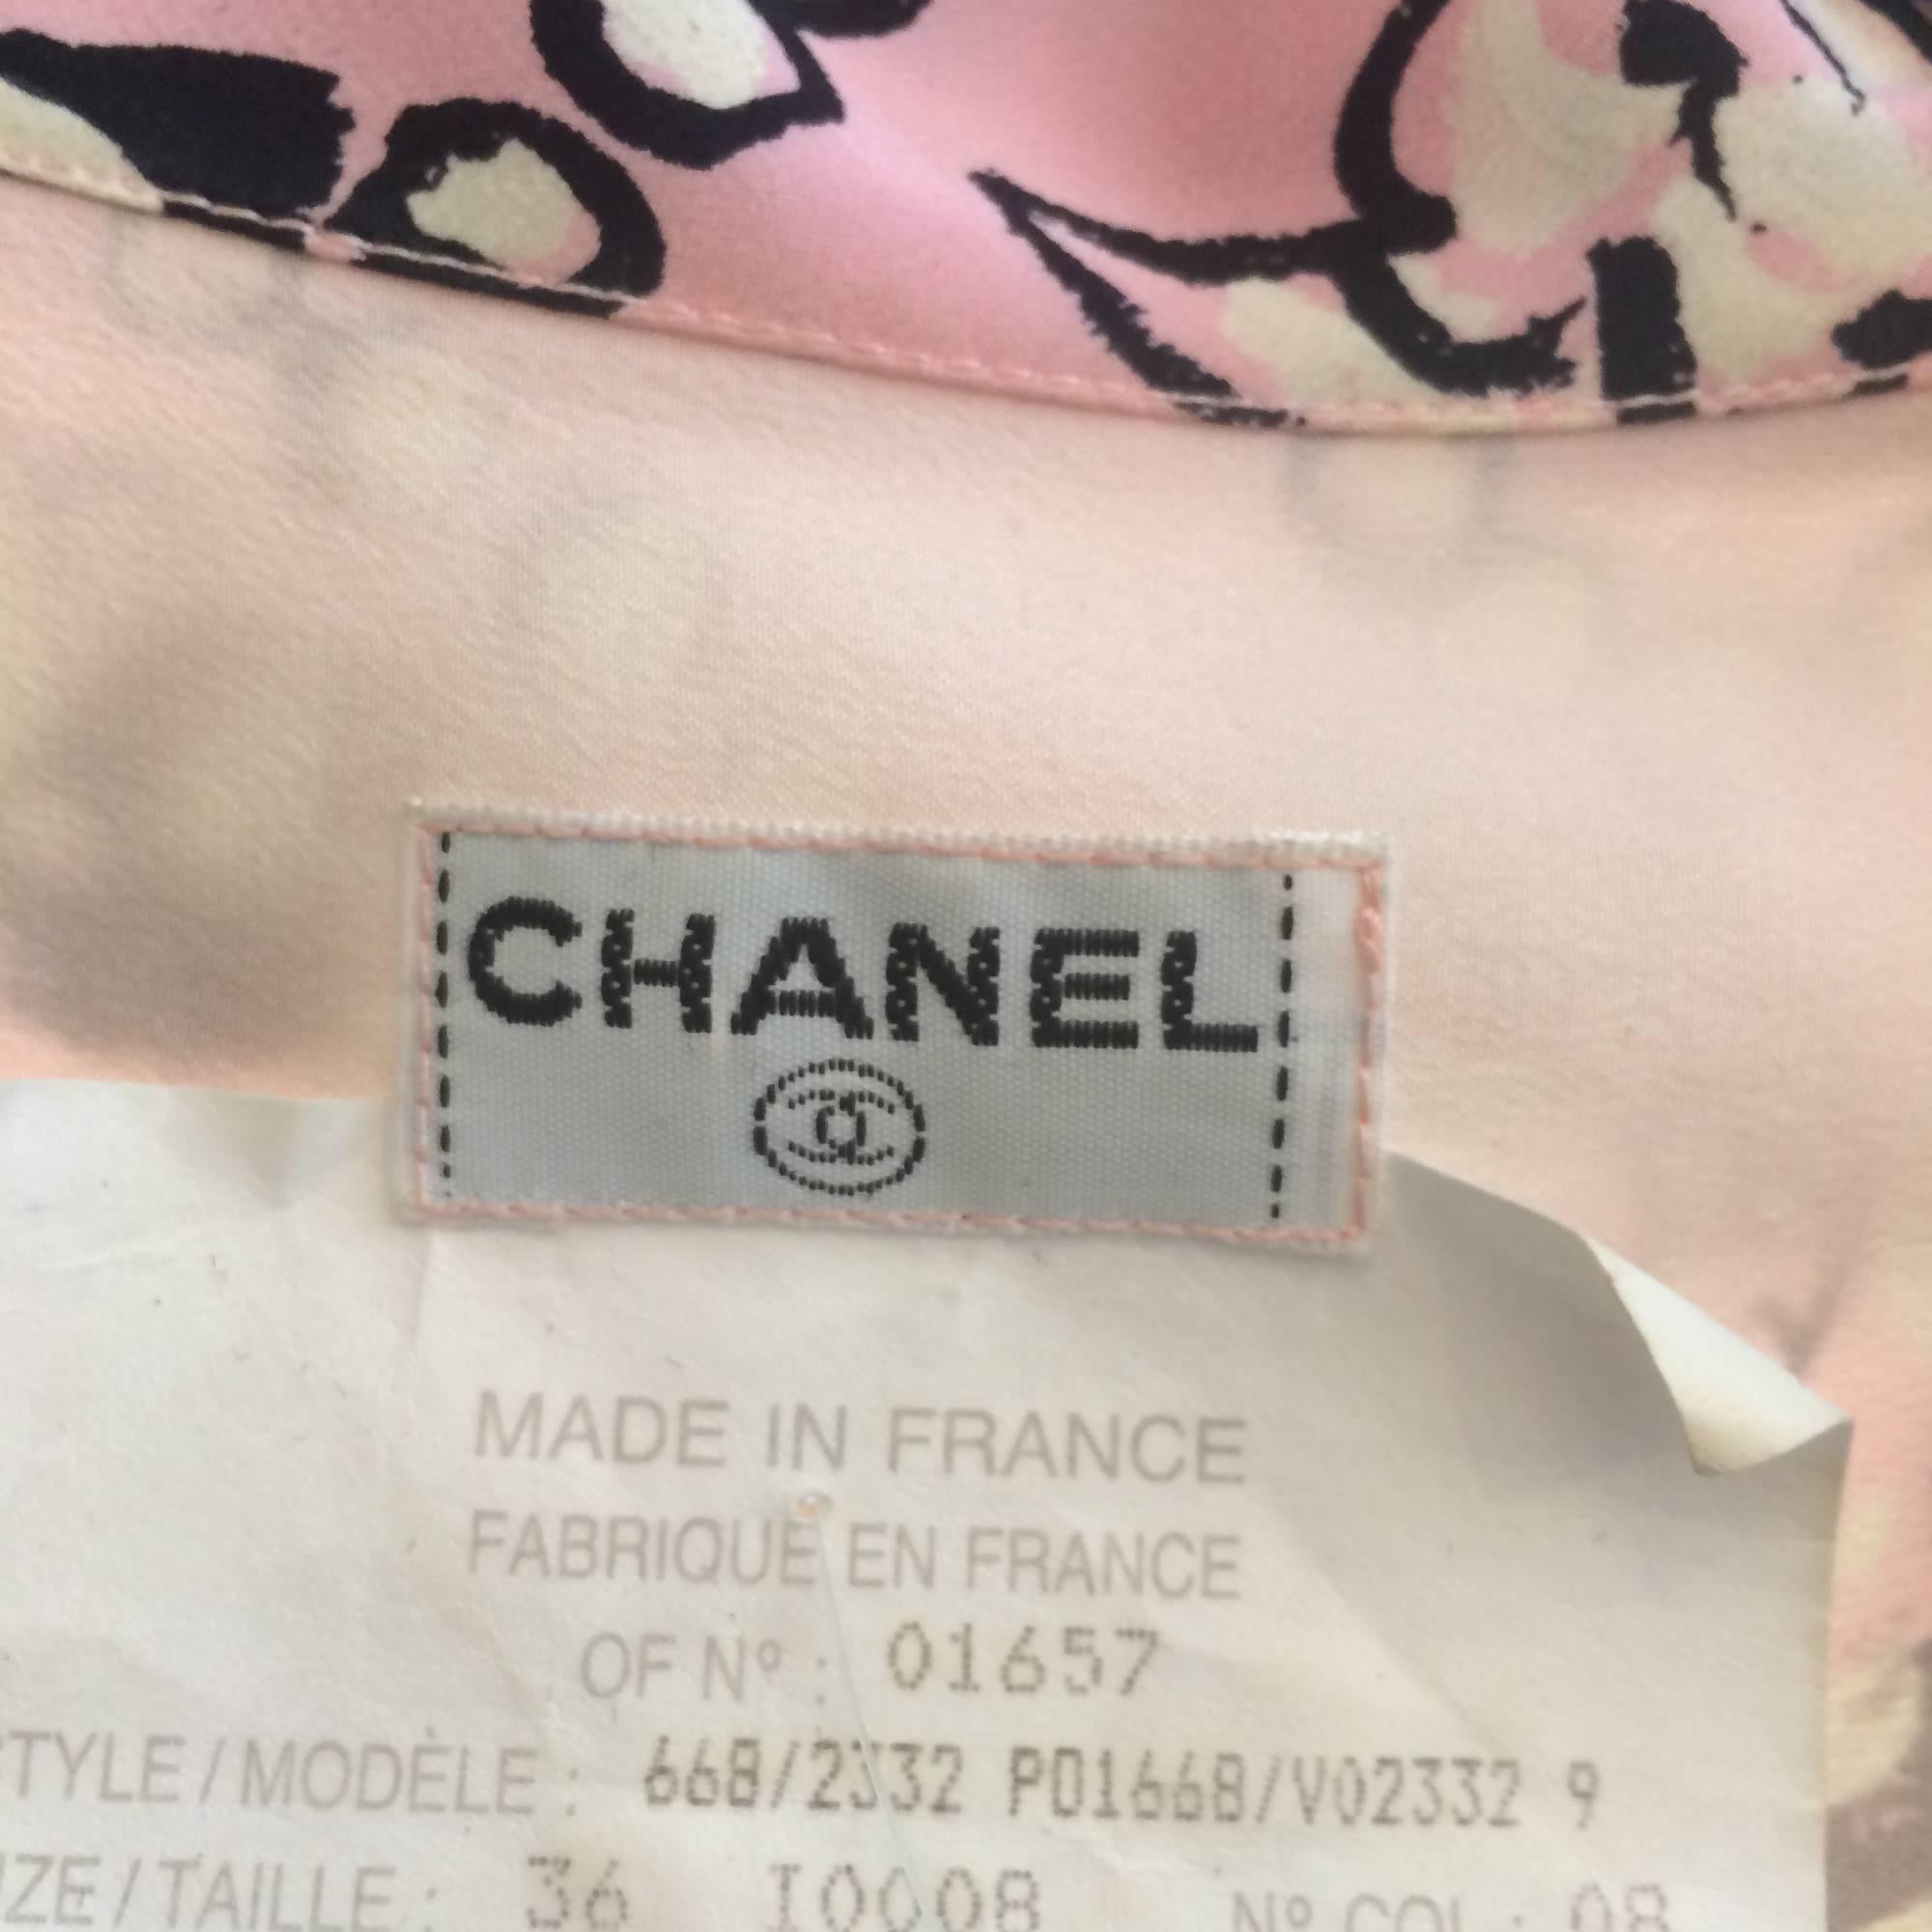 Chanel Claudia Schiffer runway worn rare Coco print dress pink silk 1993 2